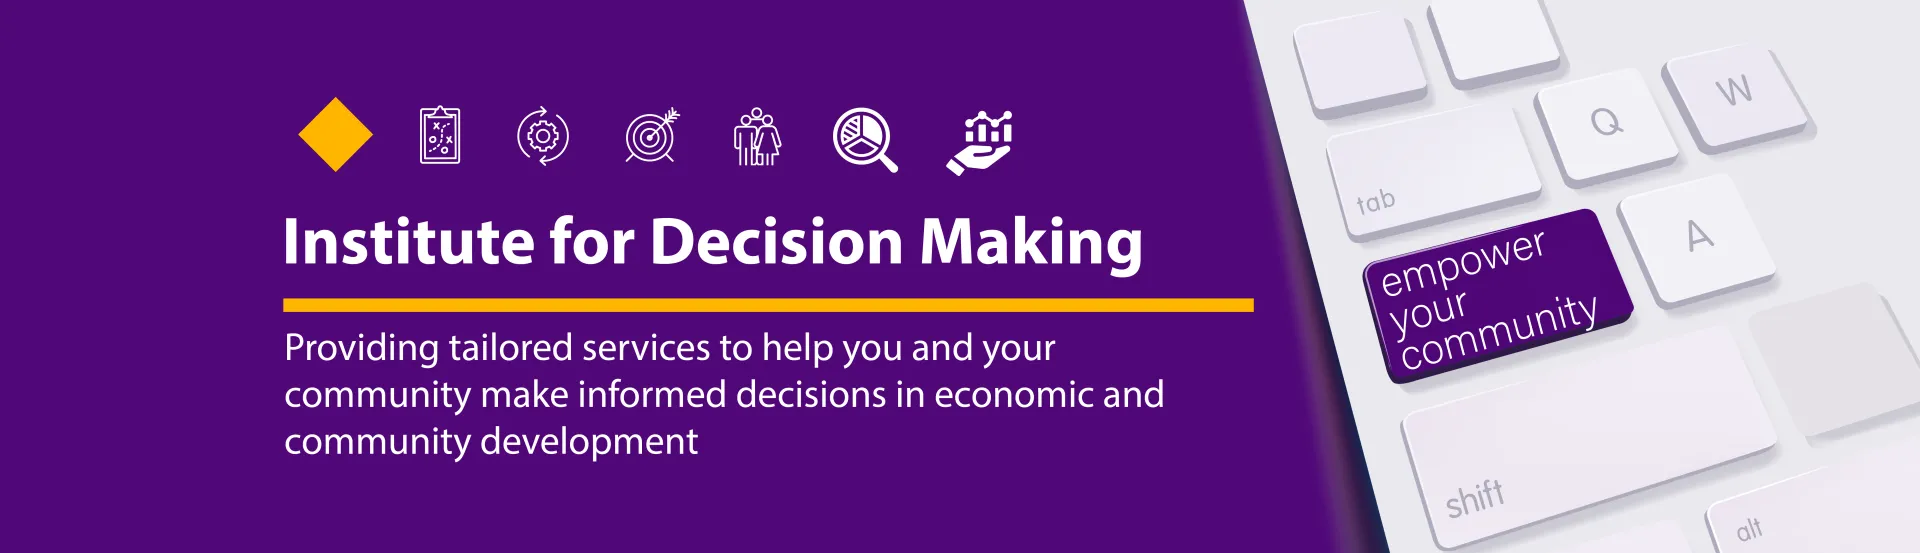 Institute for Decision Making 